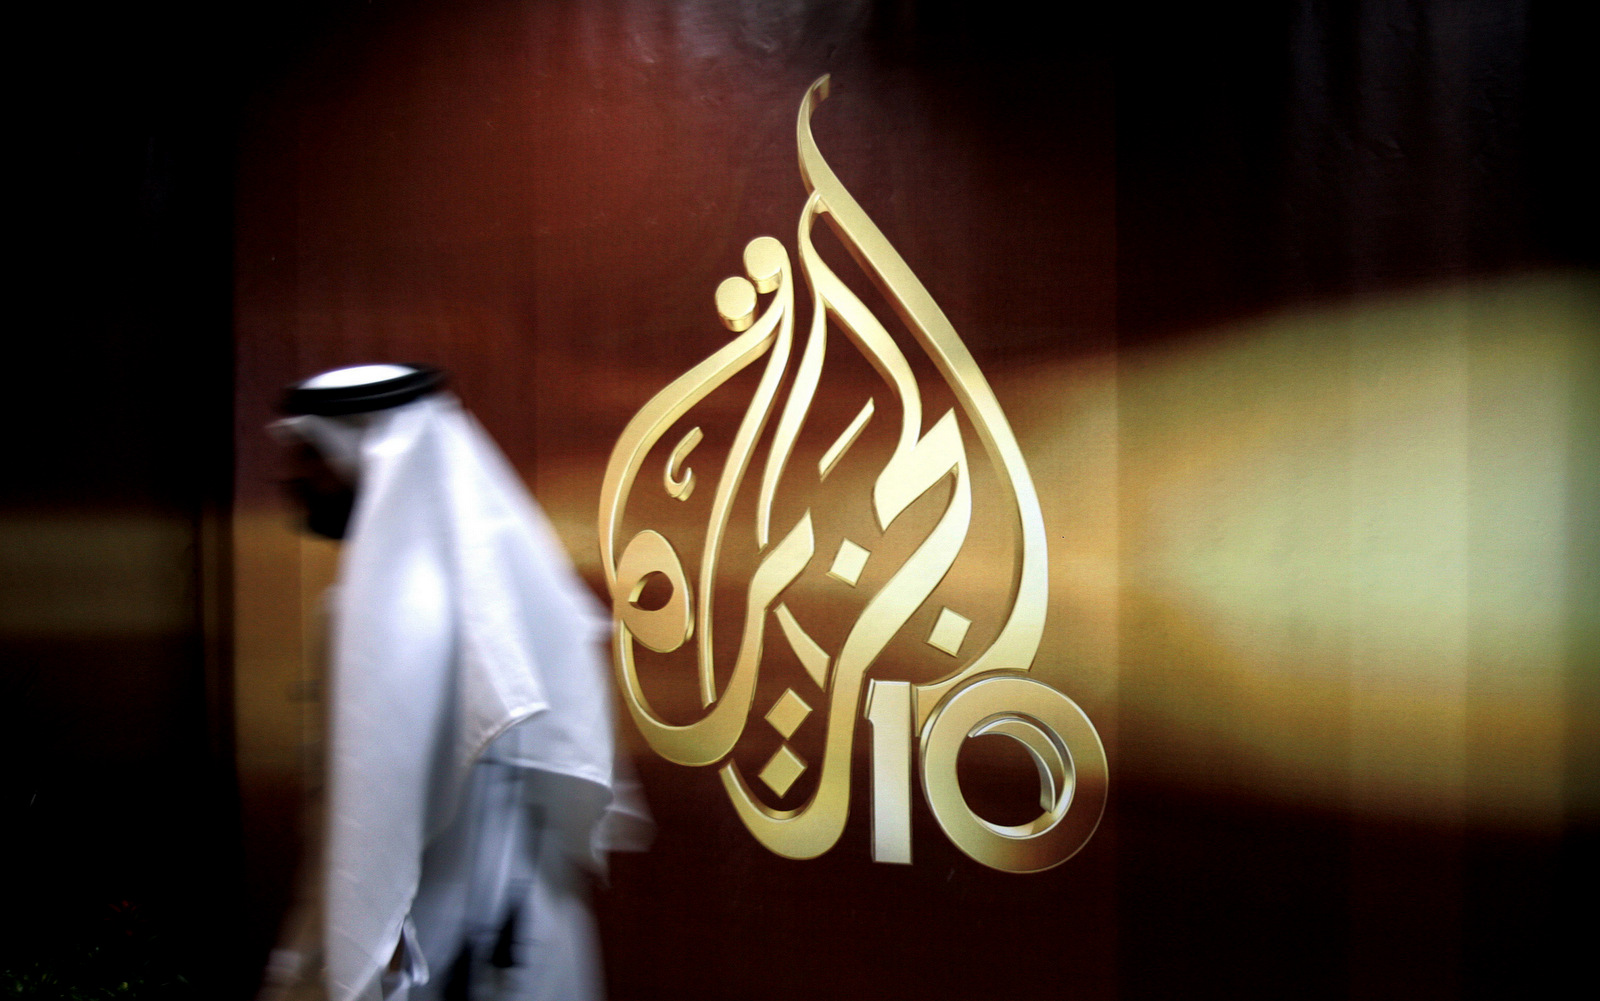 A Qatari employee of Al Jazeera Arabic language TV news channel walks past the logo of Al Jazeera in Doha, Qatar. (AP/Kamran Jebreili)